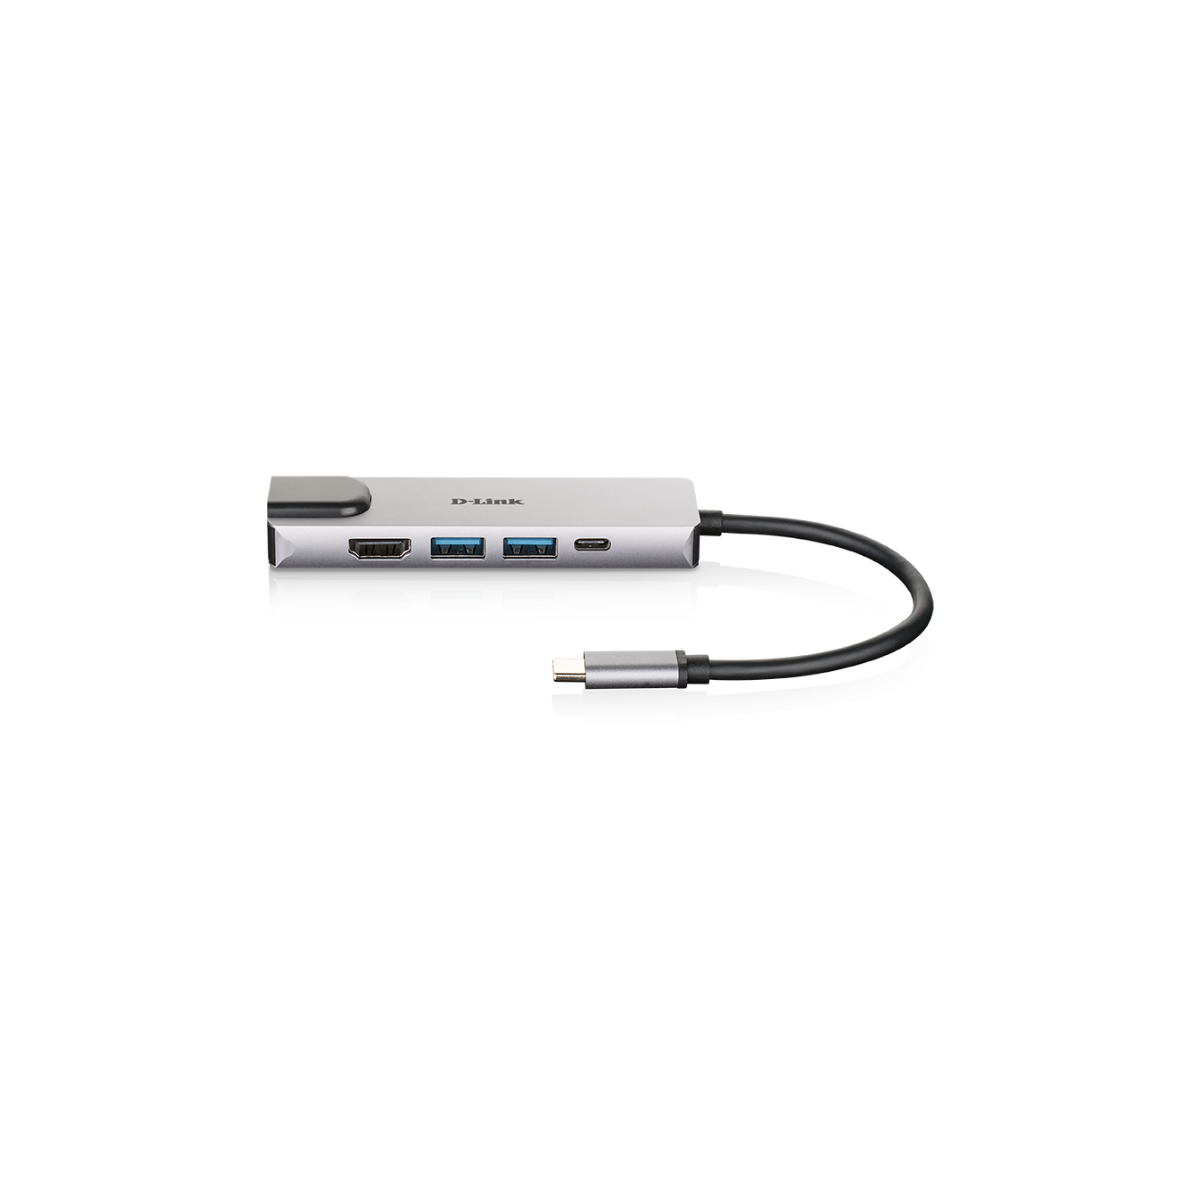 D-Link Hub USB-C 6-en-1 avec HDMI/lecteur de carte/alimentation DUB-2327